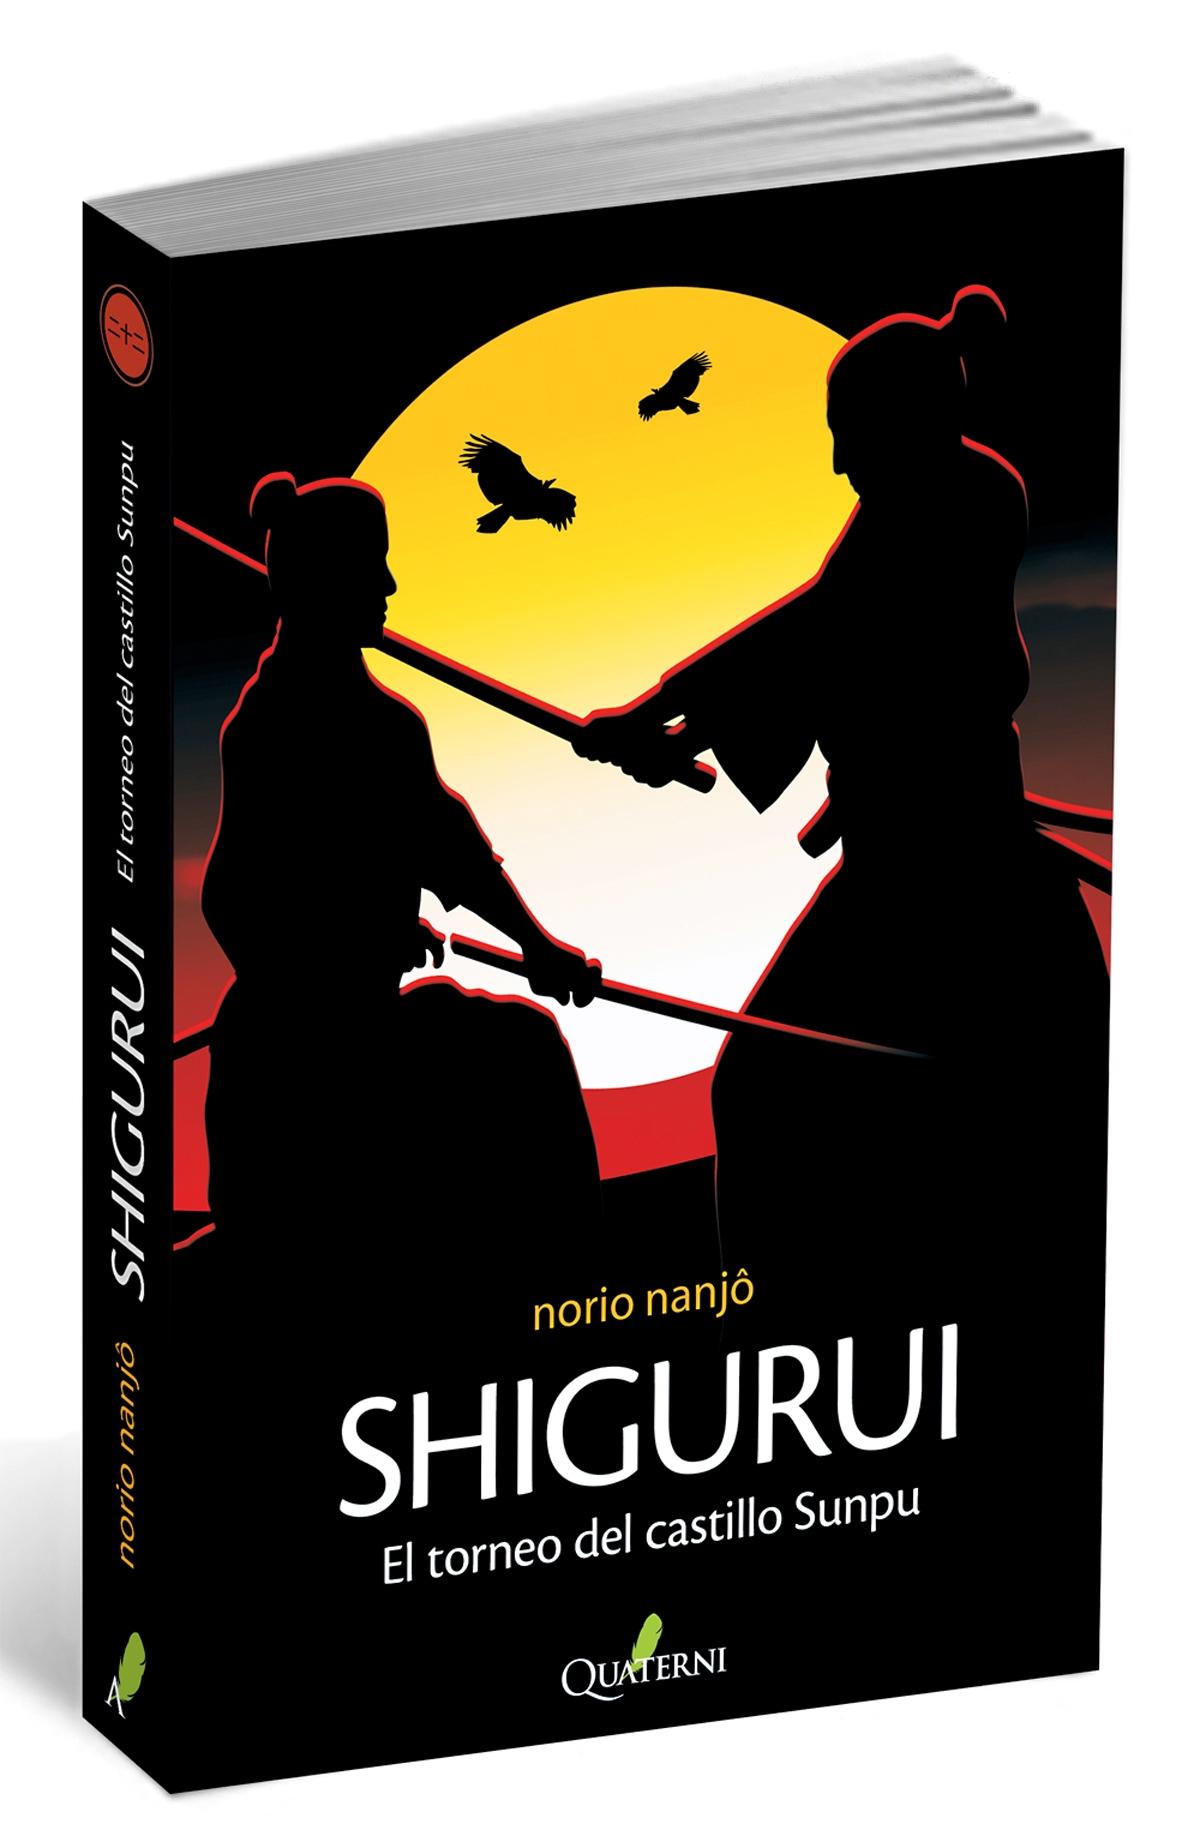 Shigurui "El torneo del castillo sunpu"